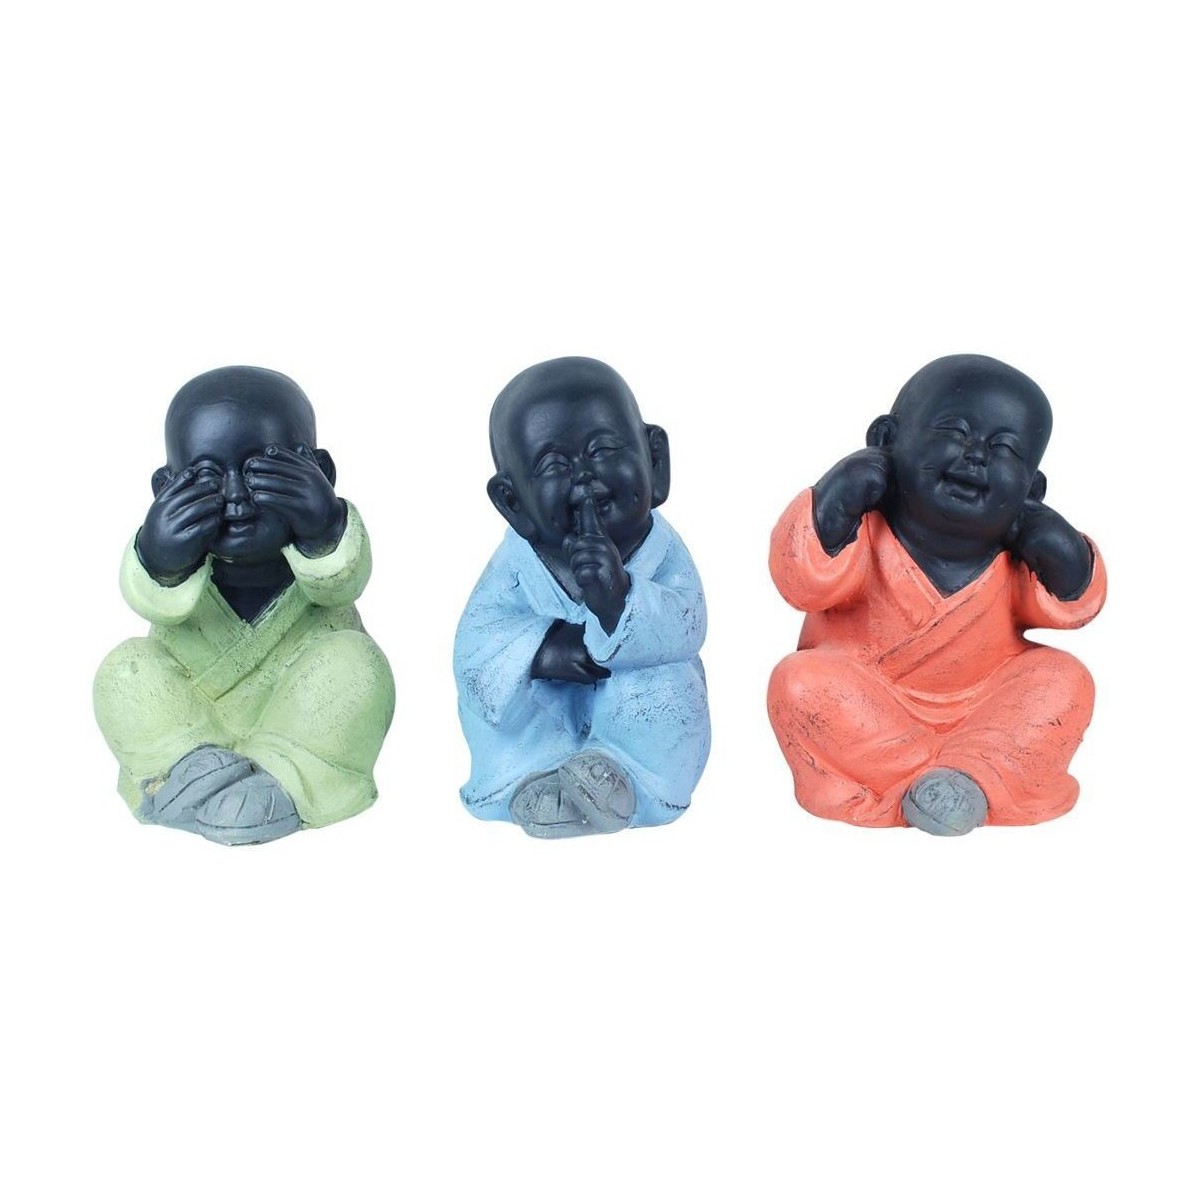 Dom Statuetki i figurki  Signes Grimalt Budda Set 3 Jednostki Wielokolorowy